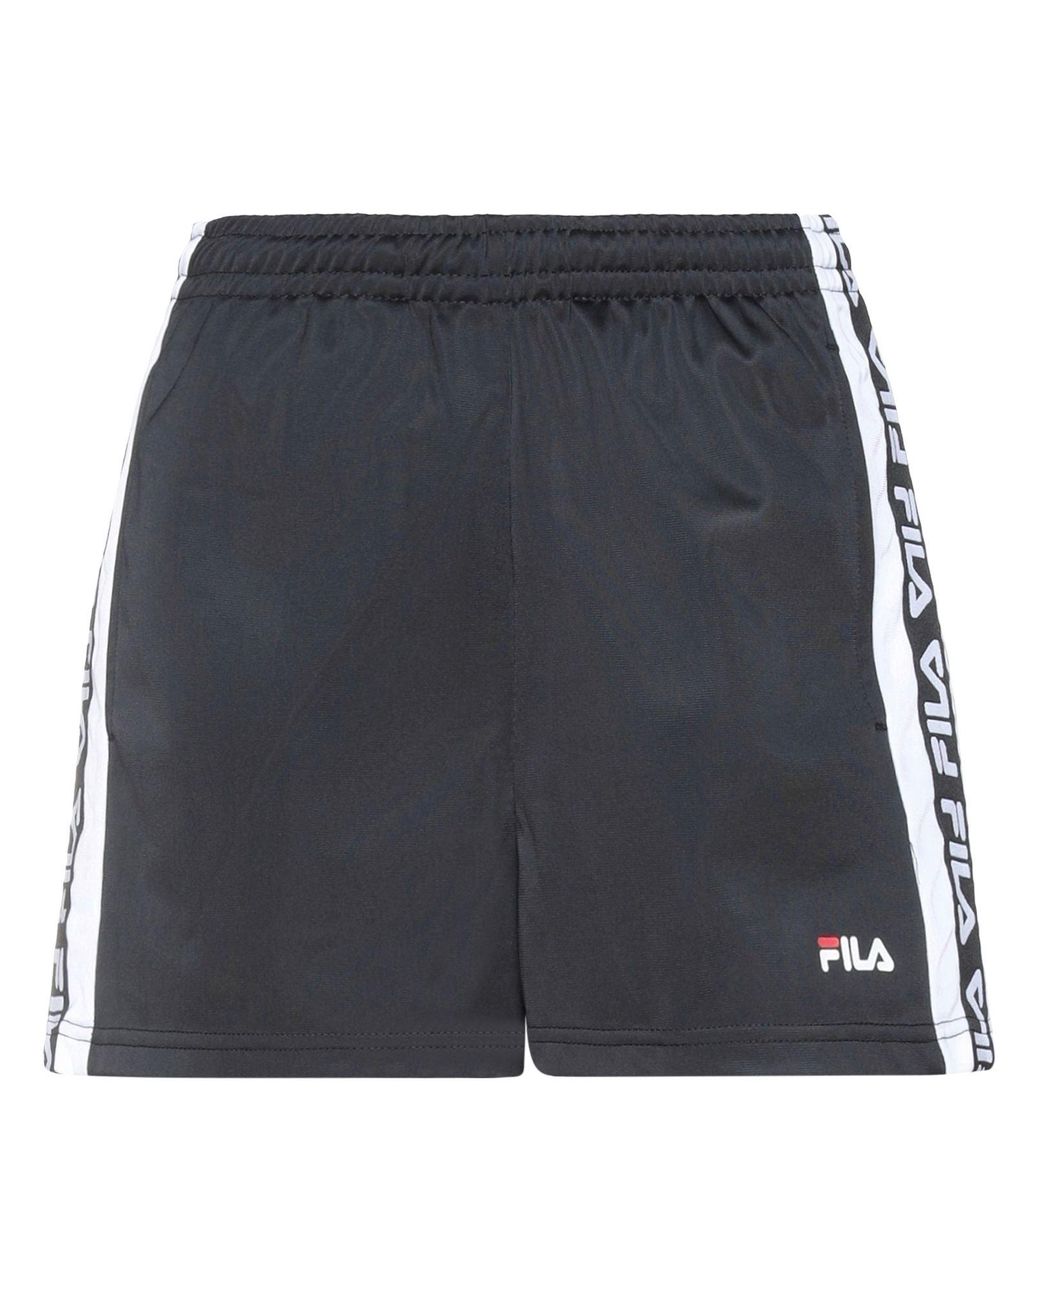 Fila Synthetic Shorts in Black - Lyst